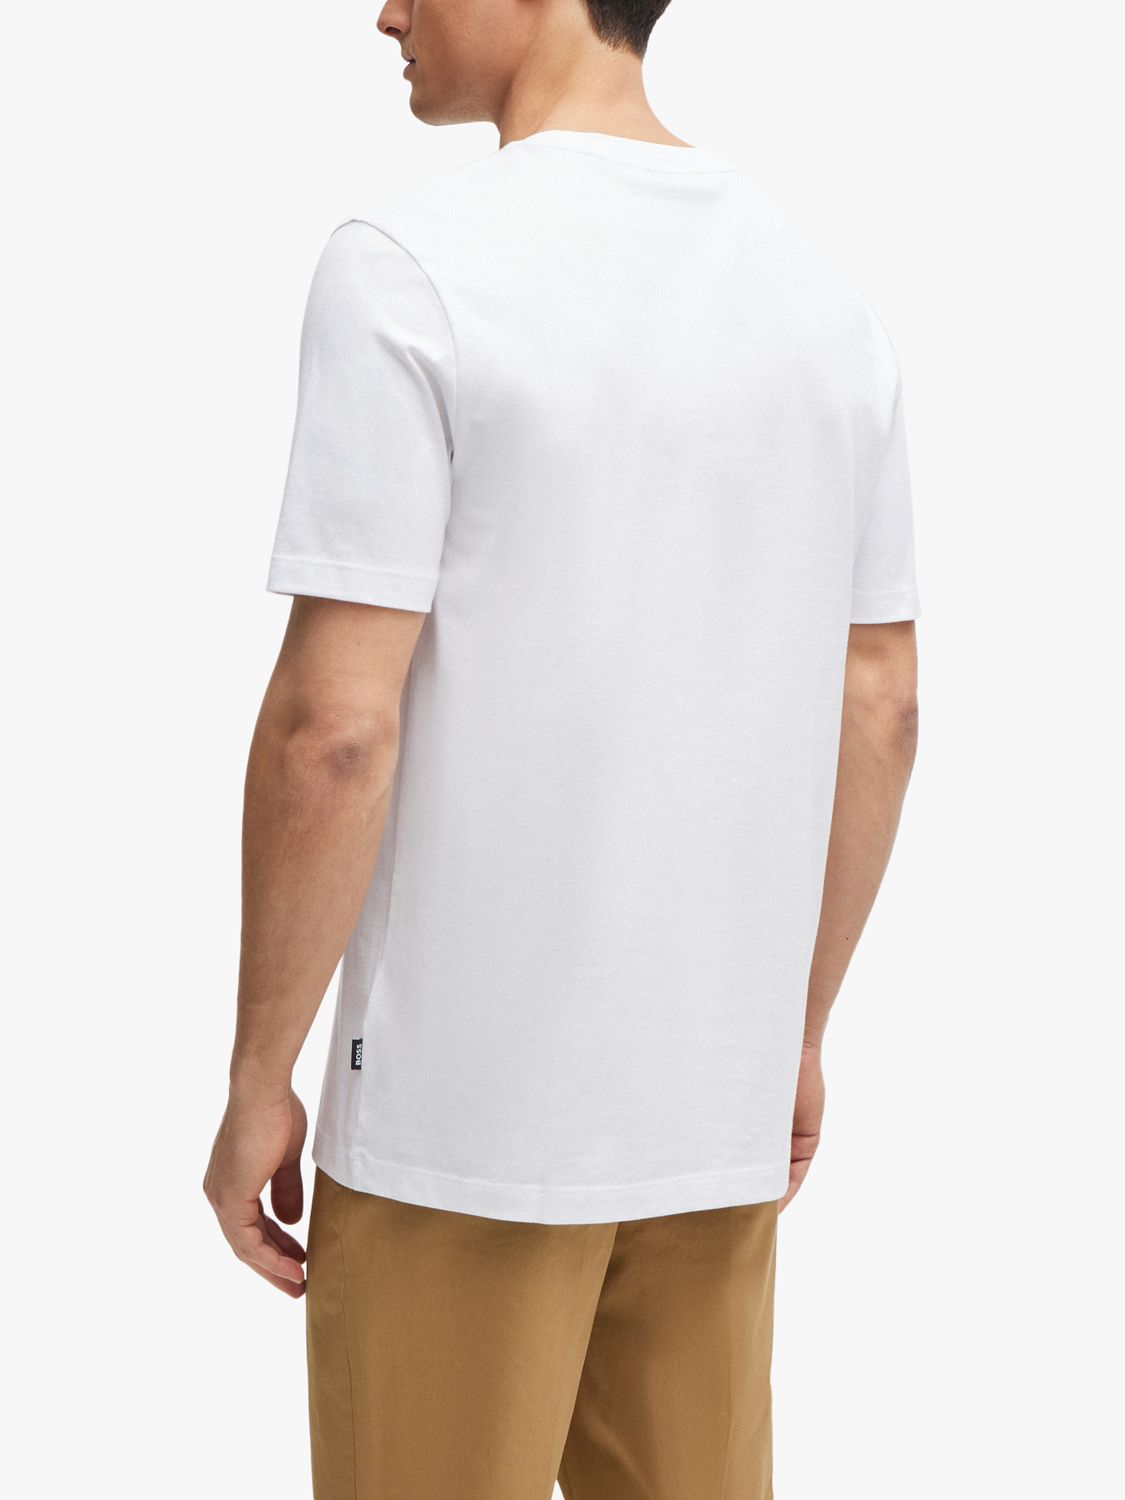 HUGO BOSS BOSS TIburt 388 Short Sleeve T-Shirt, Multi, M